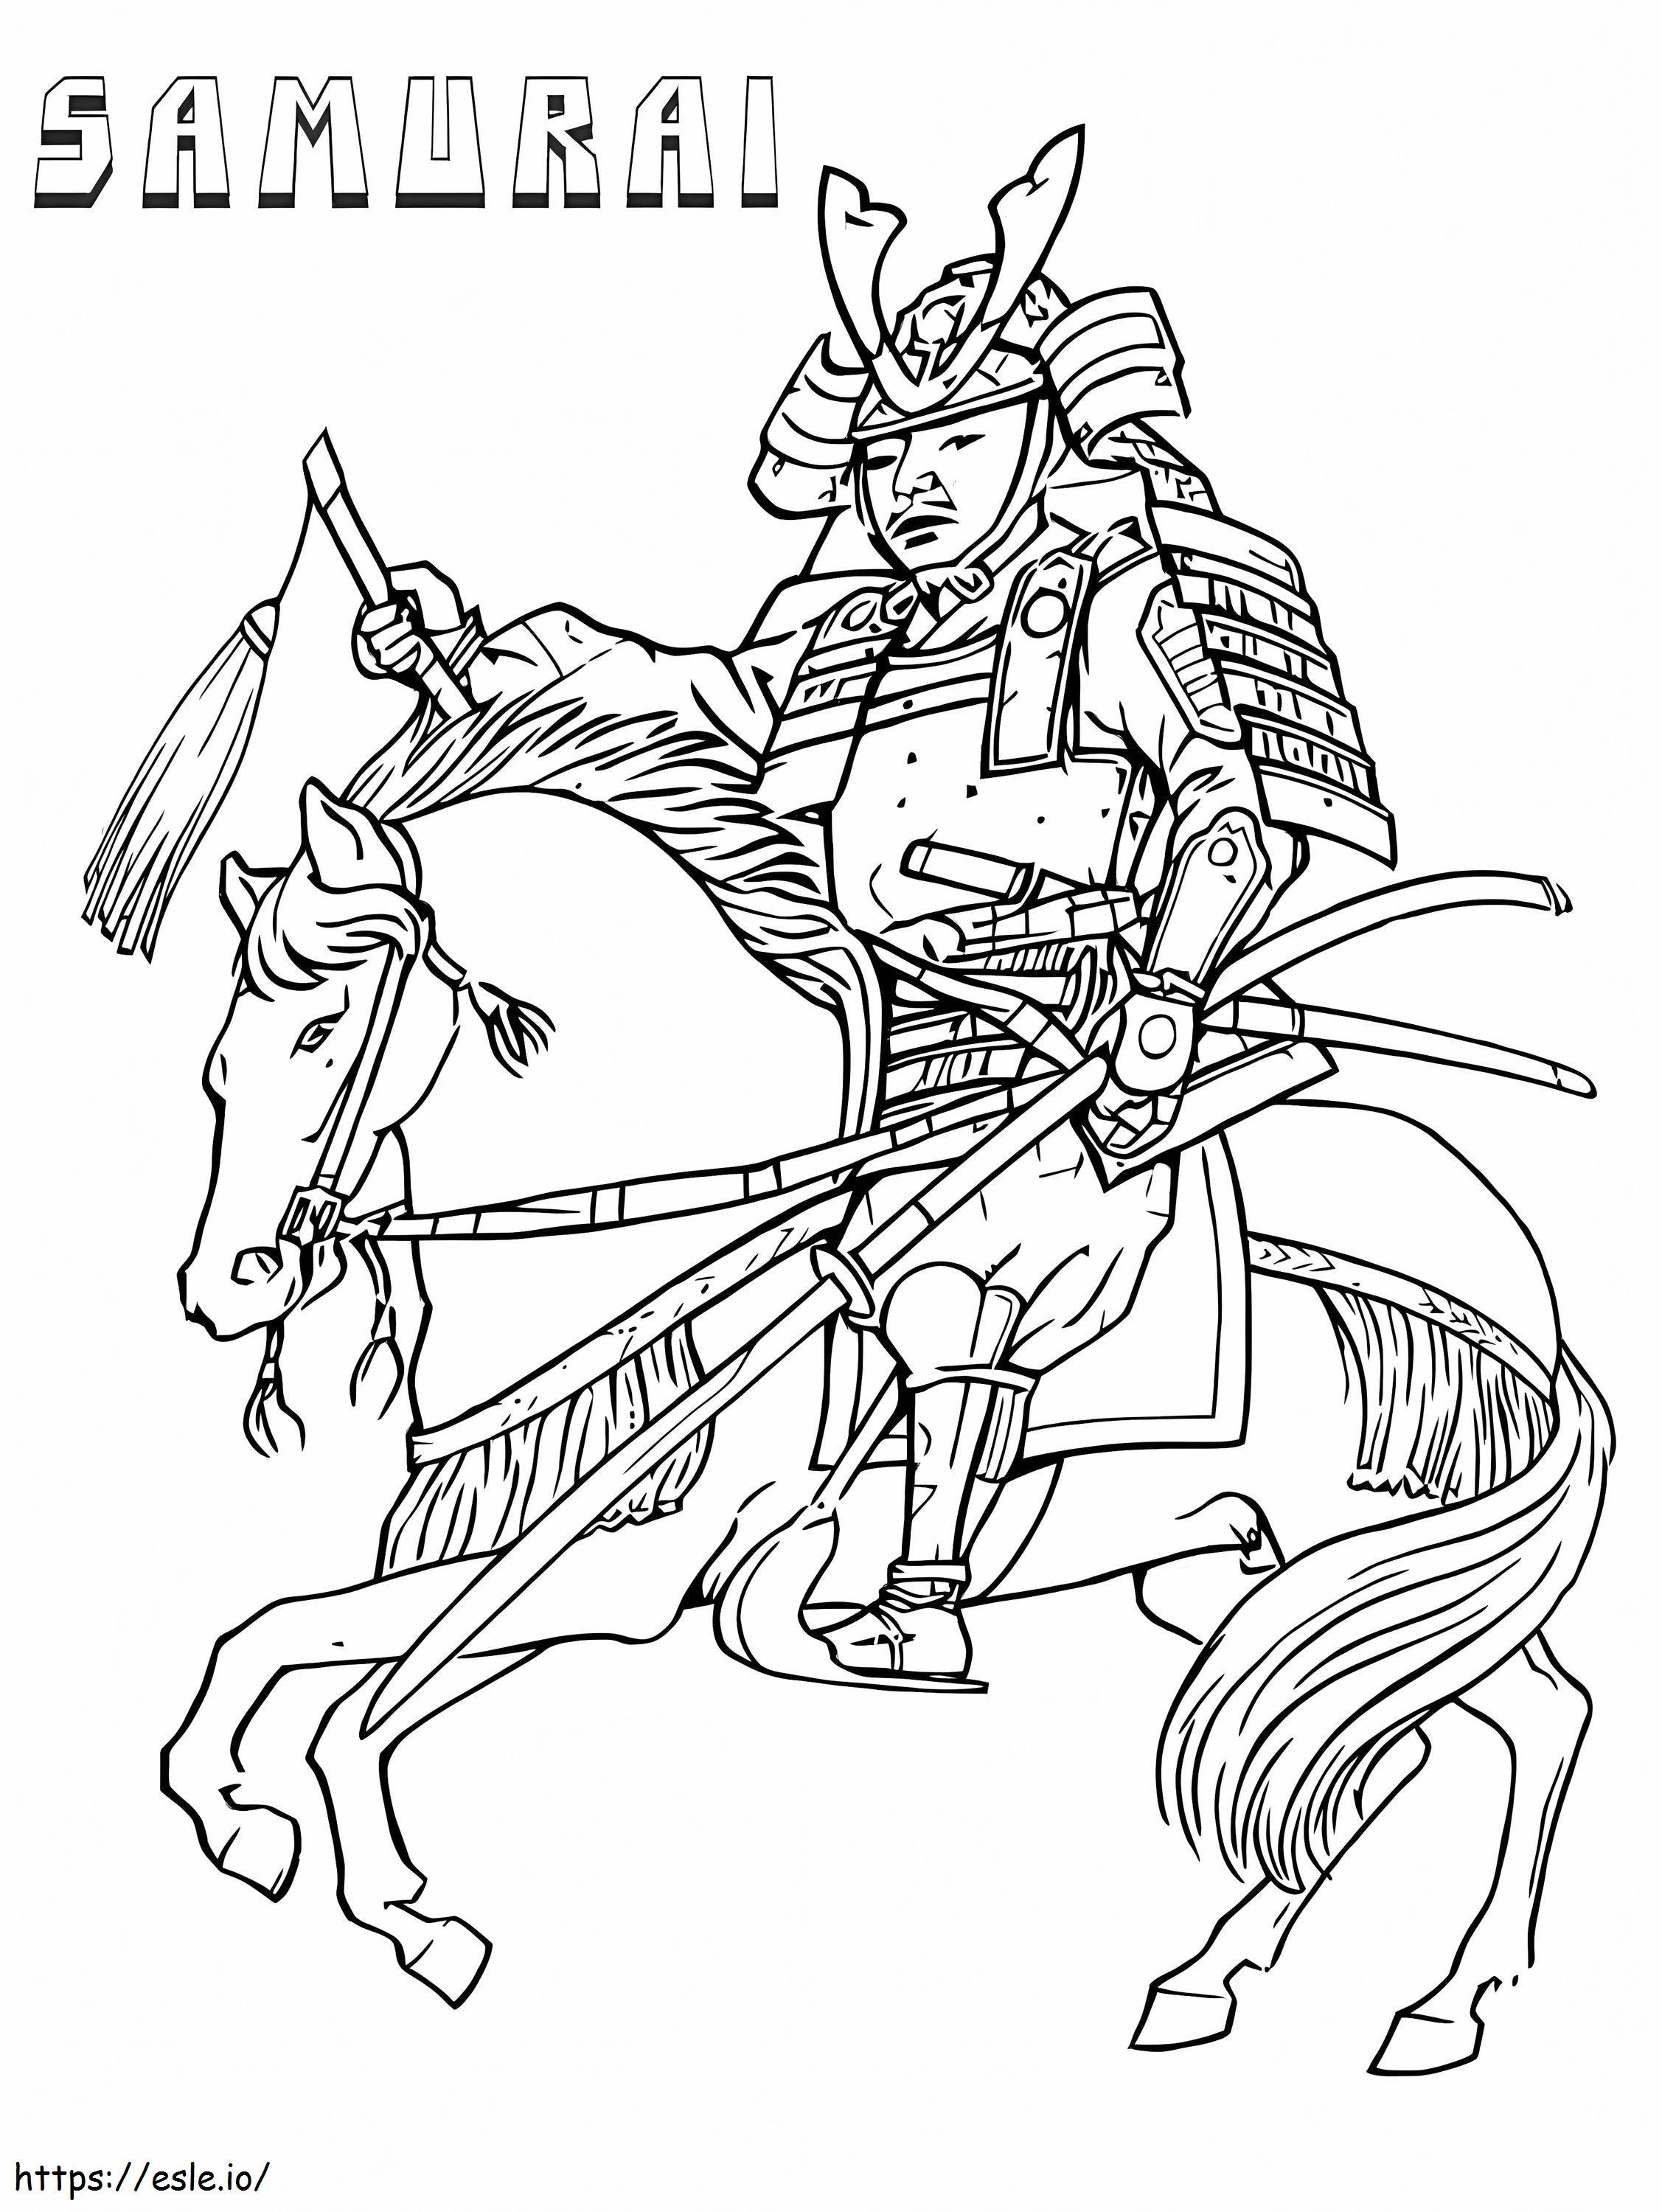 Samurai zu Pferd ausmalbilder